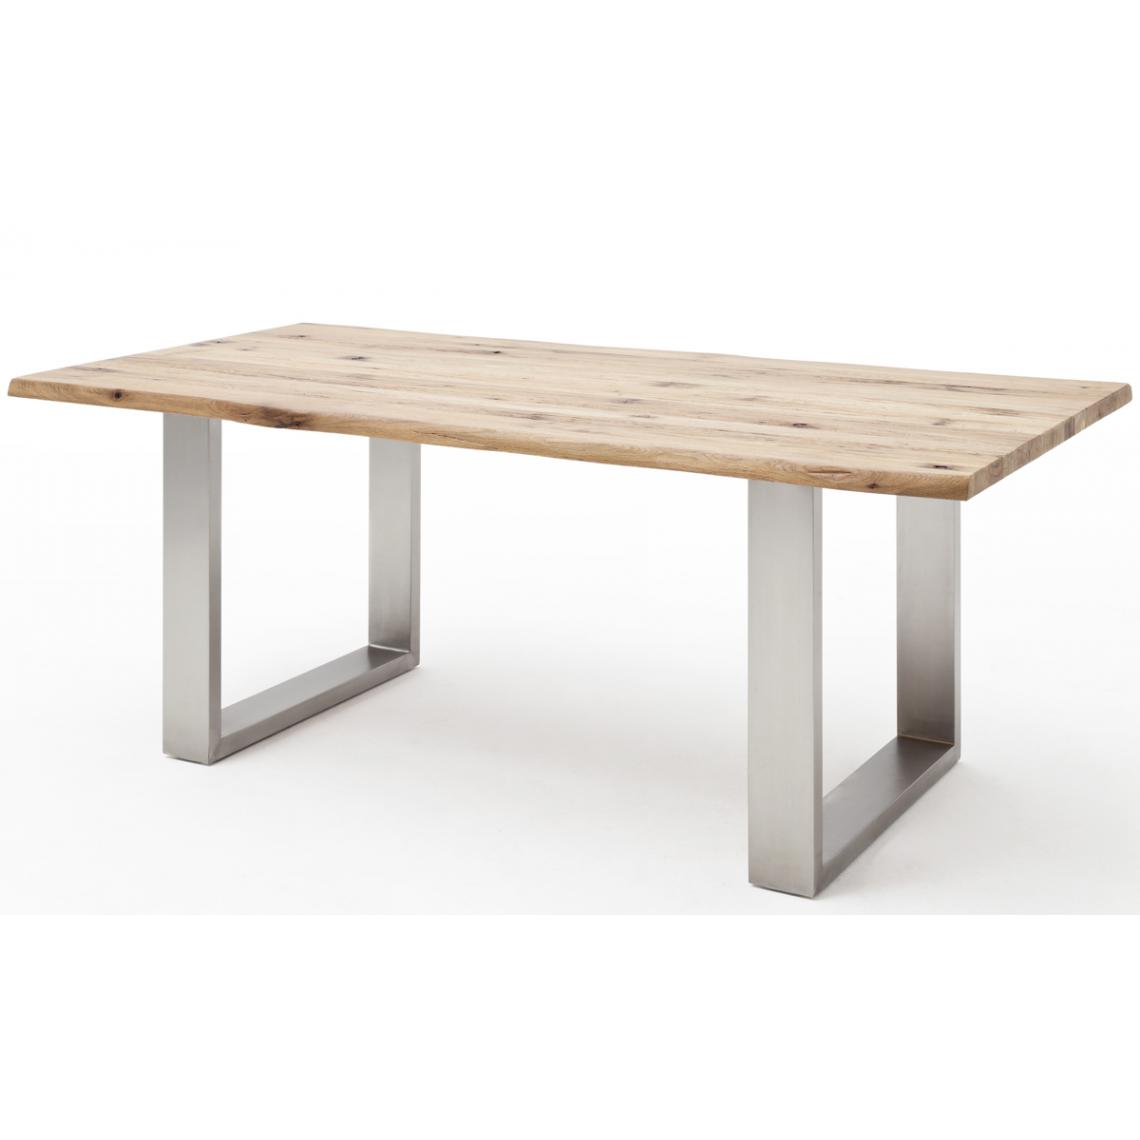 Pegane - Table à manger / table diner en chêne massif teinte chêne sauvage - L.220 x H.77 x P.100 cm -PEGANE- - Tables à manger